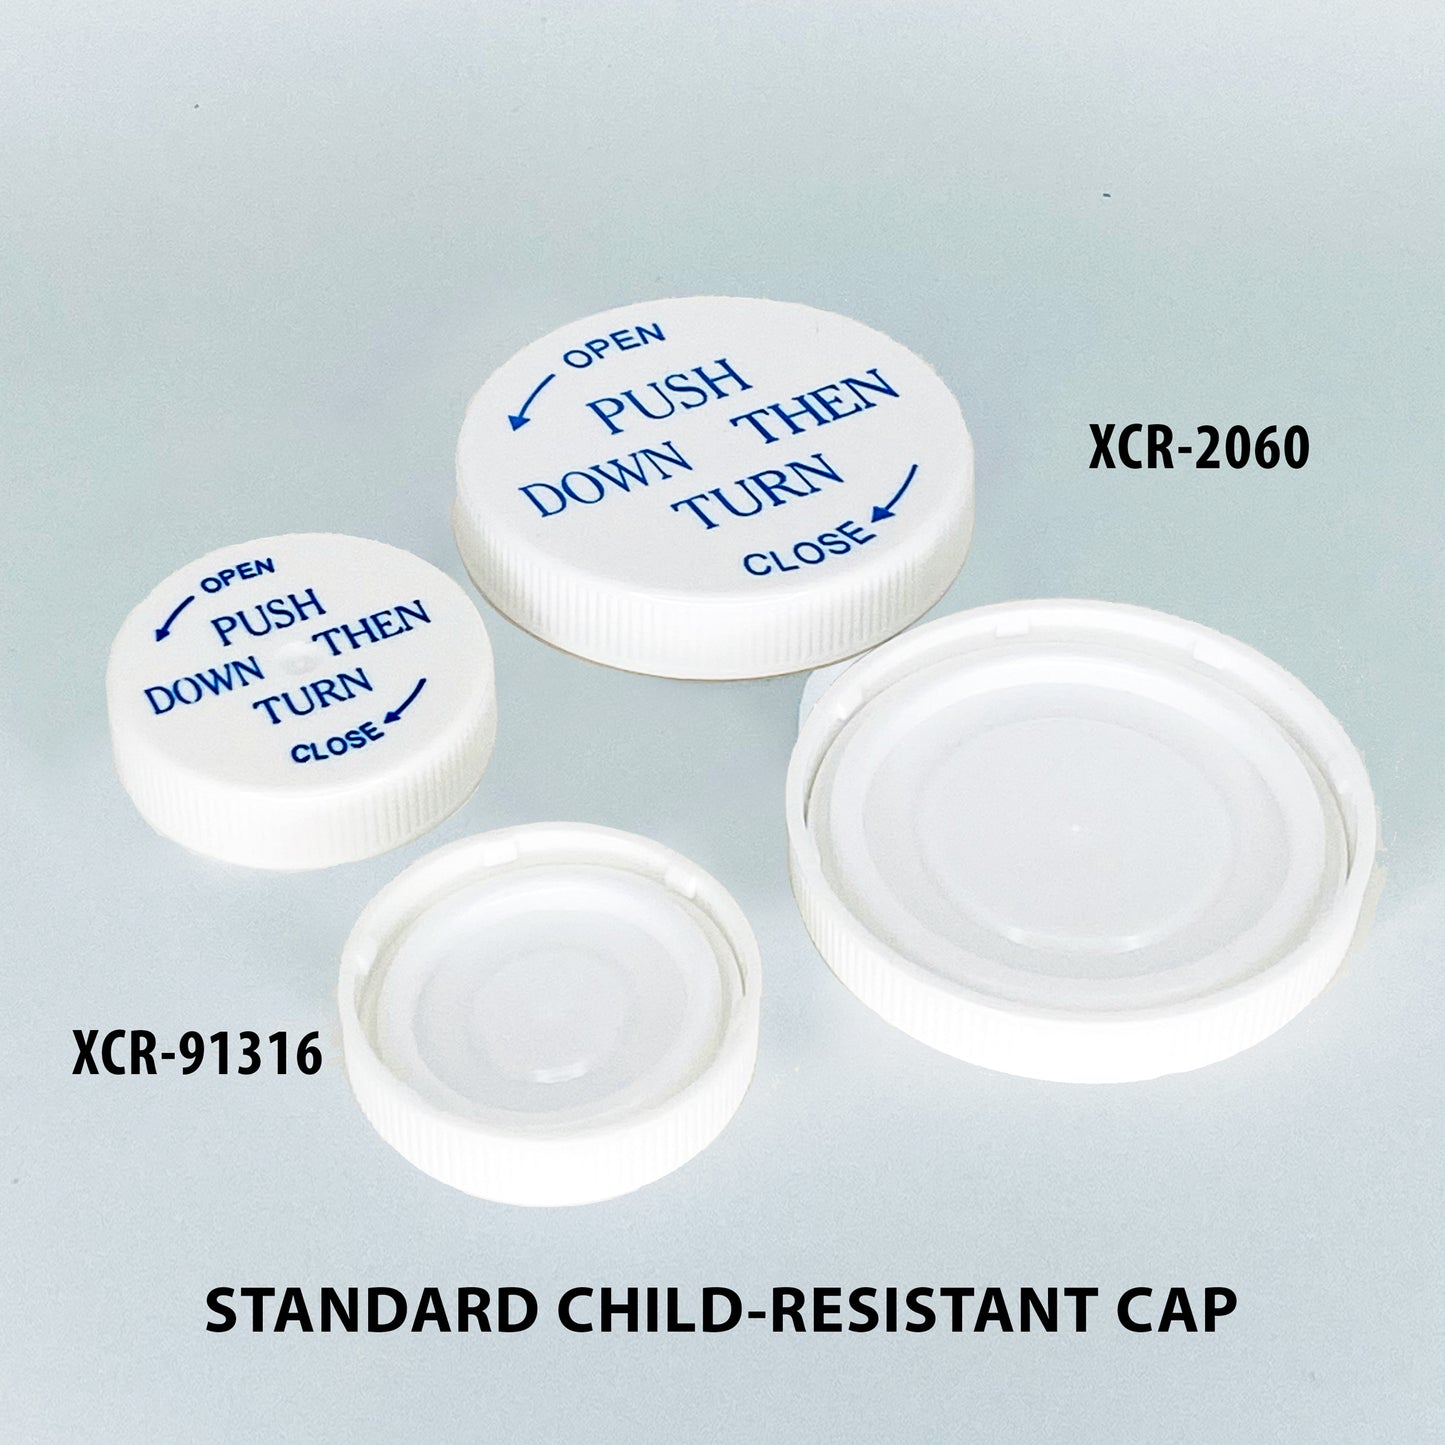 Standard Child-Resistant Caps (XCR)